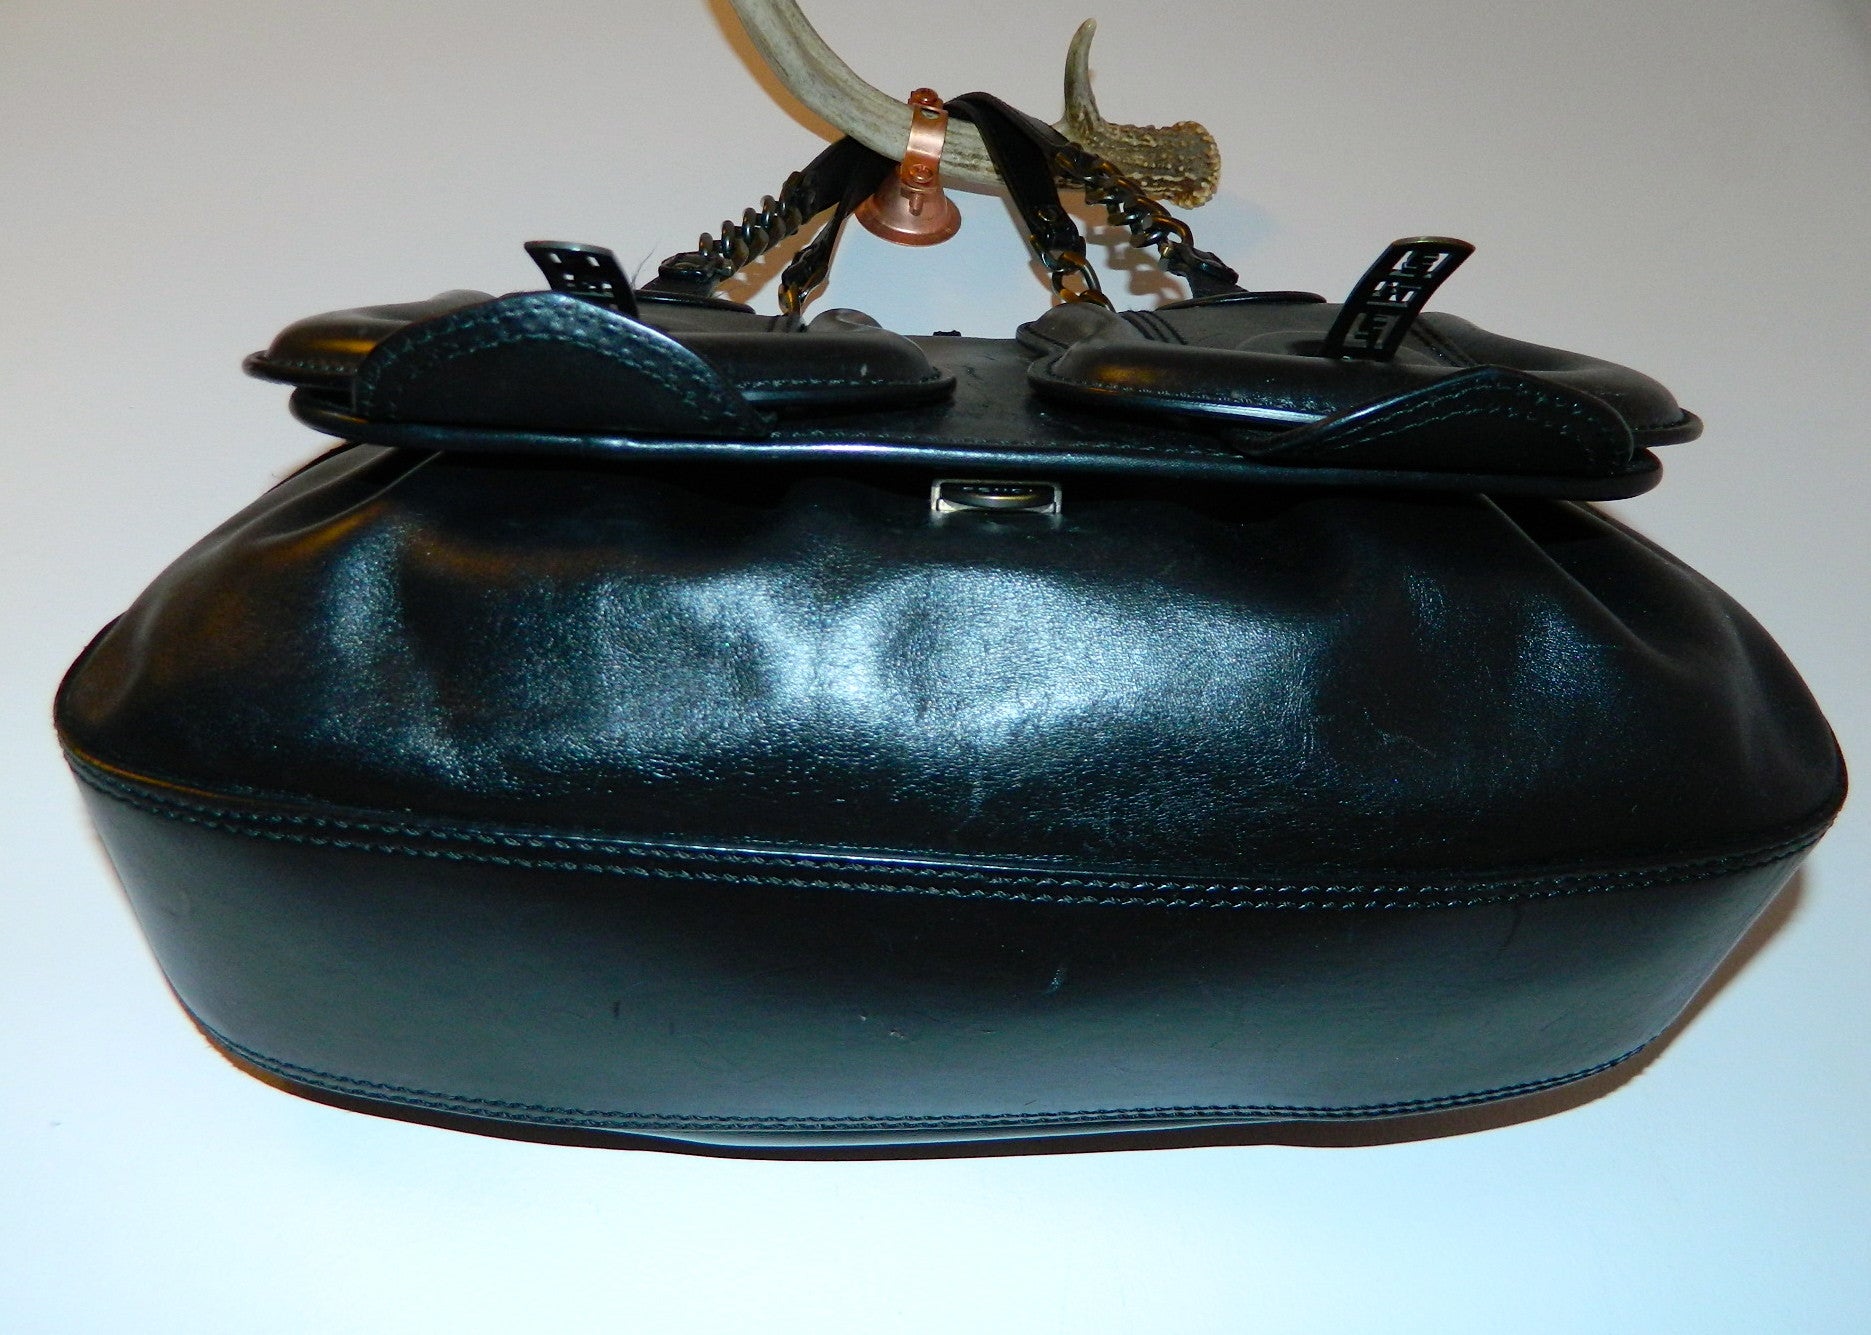 black leather FENDI B Buckle bag purse / chain straps